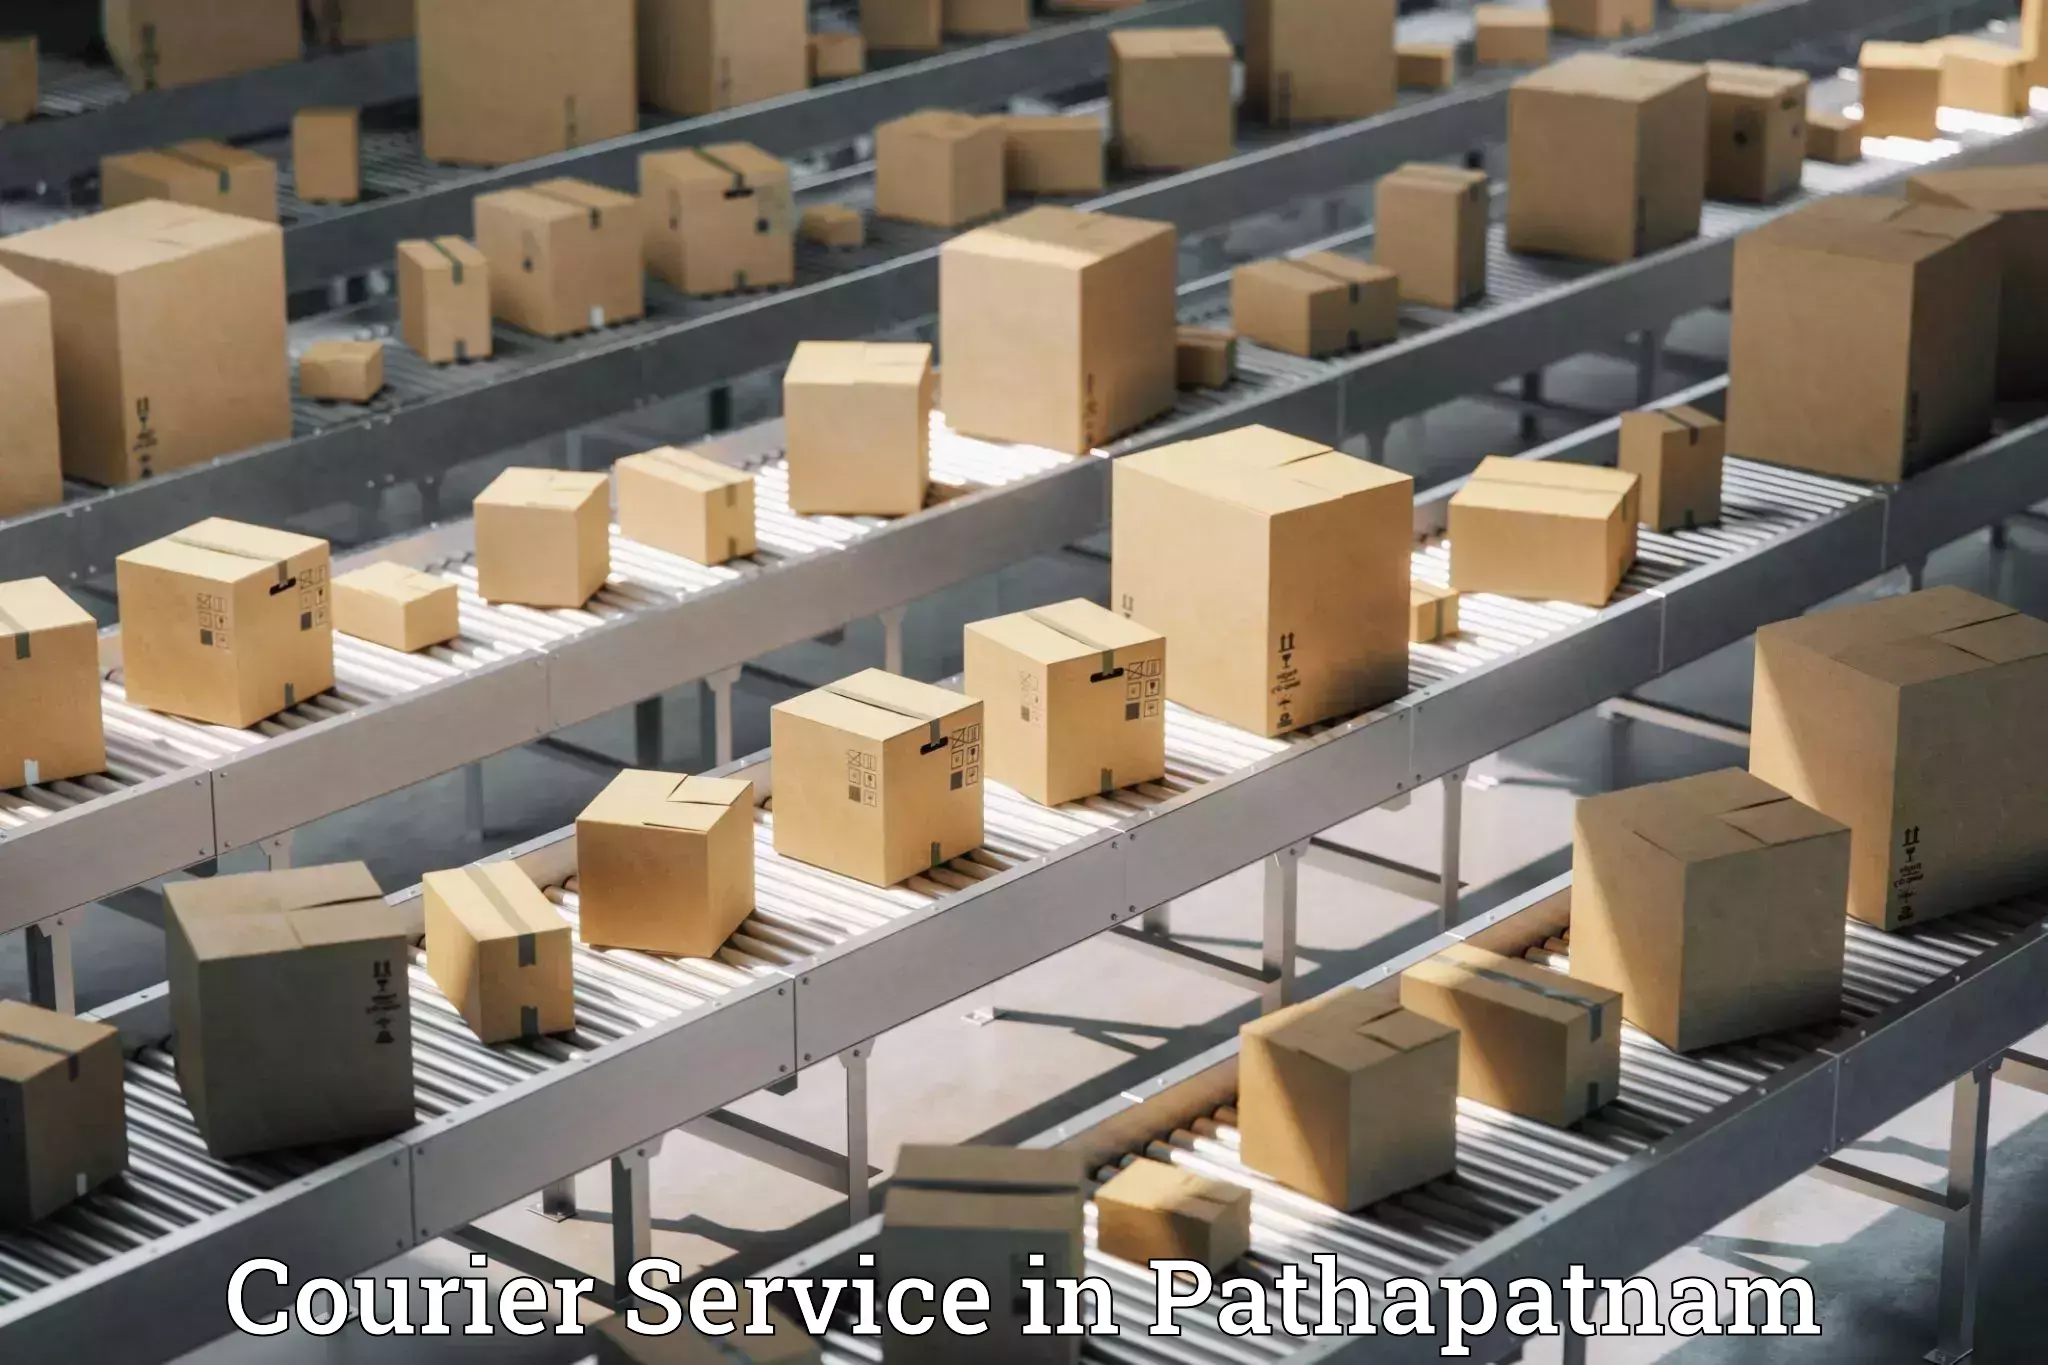 Courier service comparison in Pathapatnam